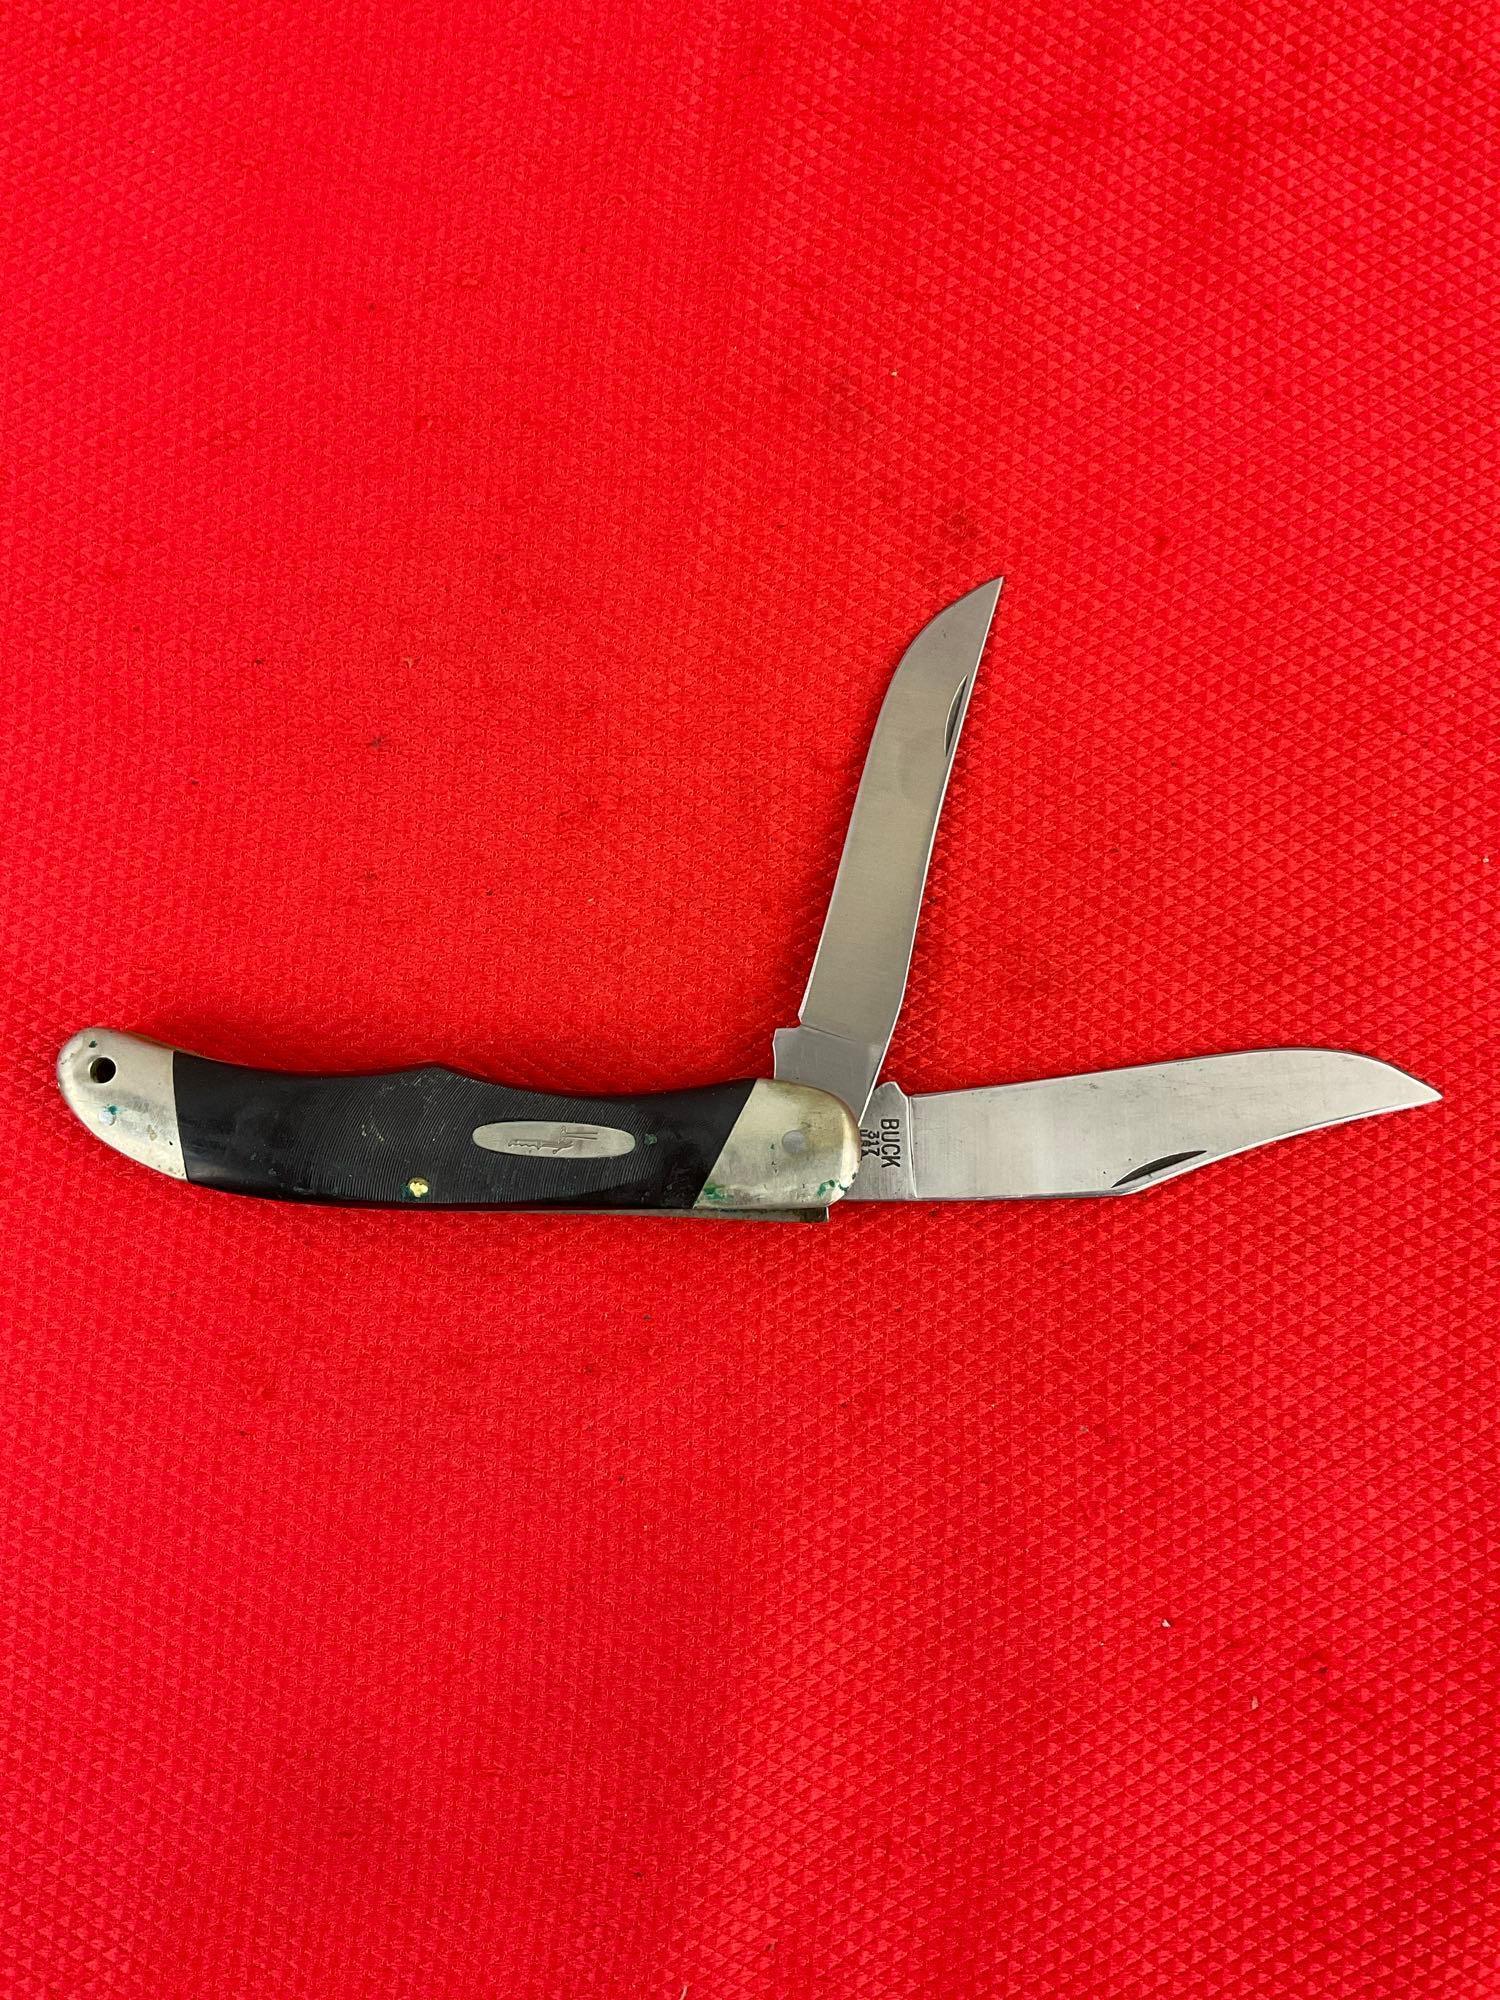 Vintage Buck 3.5" Steel 2-Blade Folding Trailblazer Pocket Knife Model 317 w/ Original Sheath. See